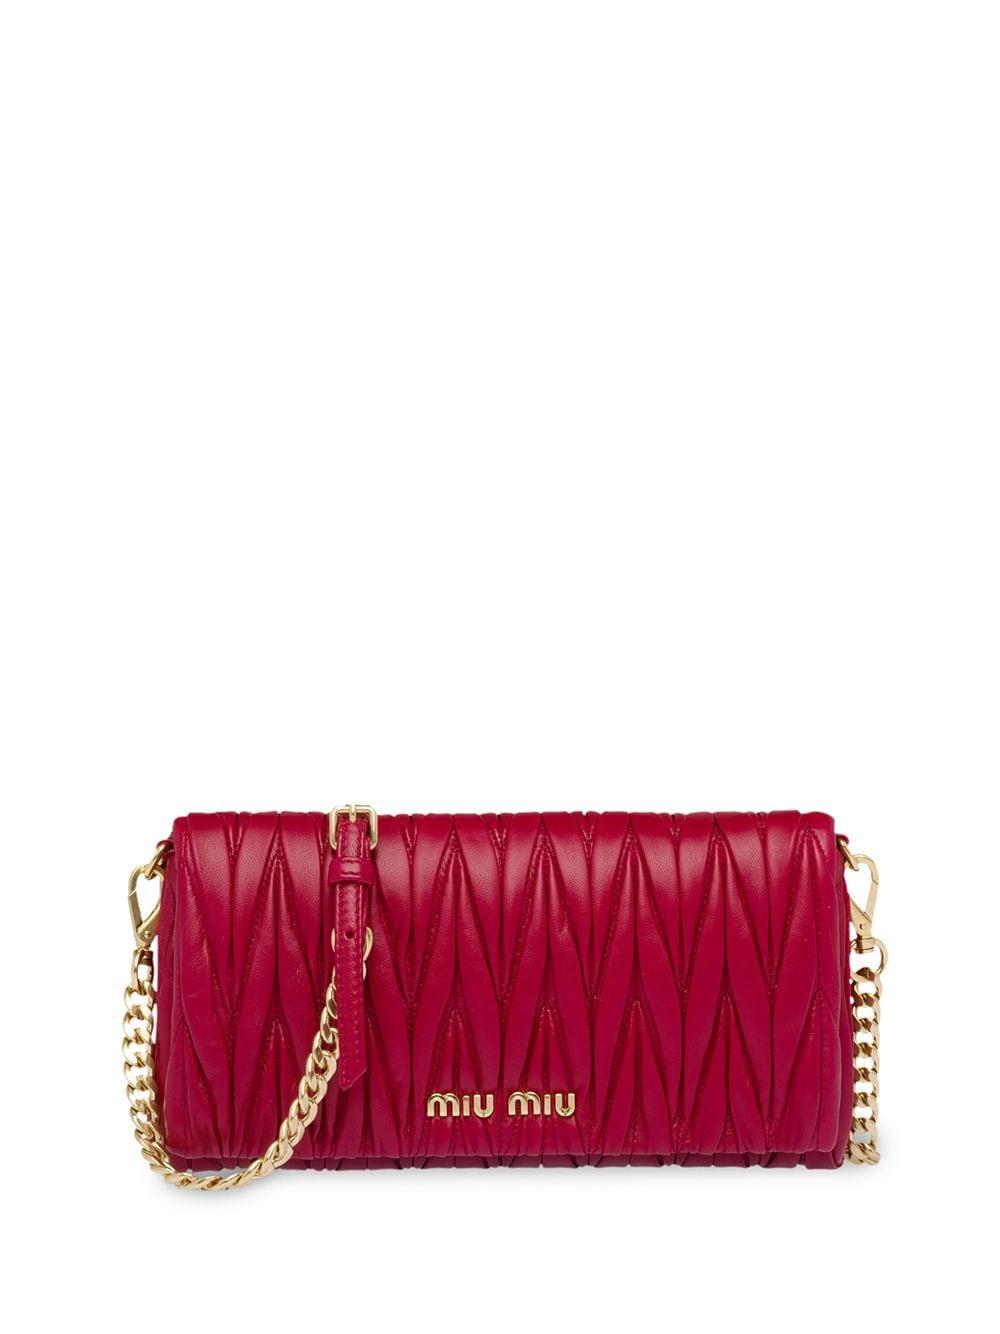 Miu Miu Matelassé Nappa Leather Mini-bag in Red | Lyst